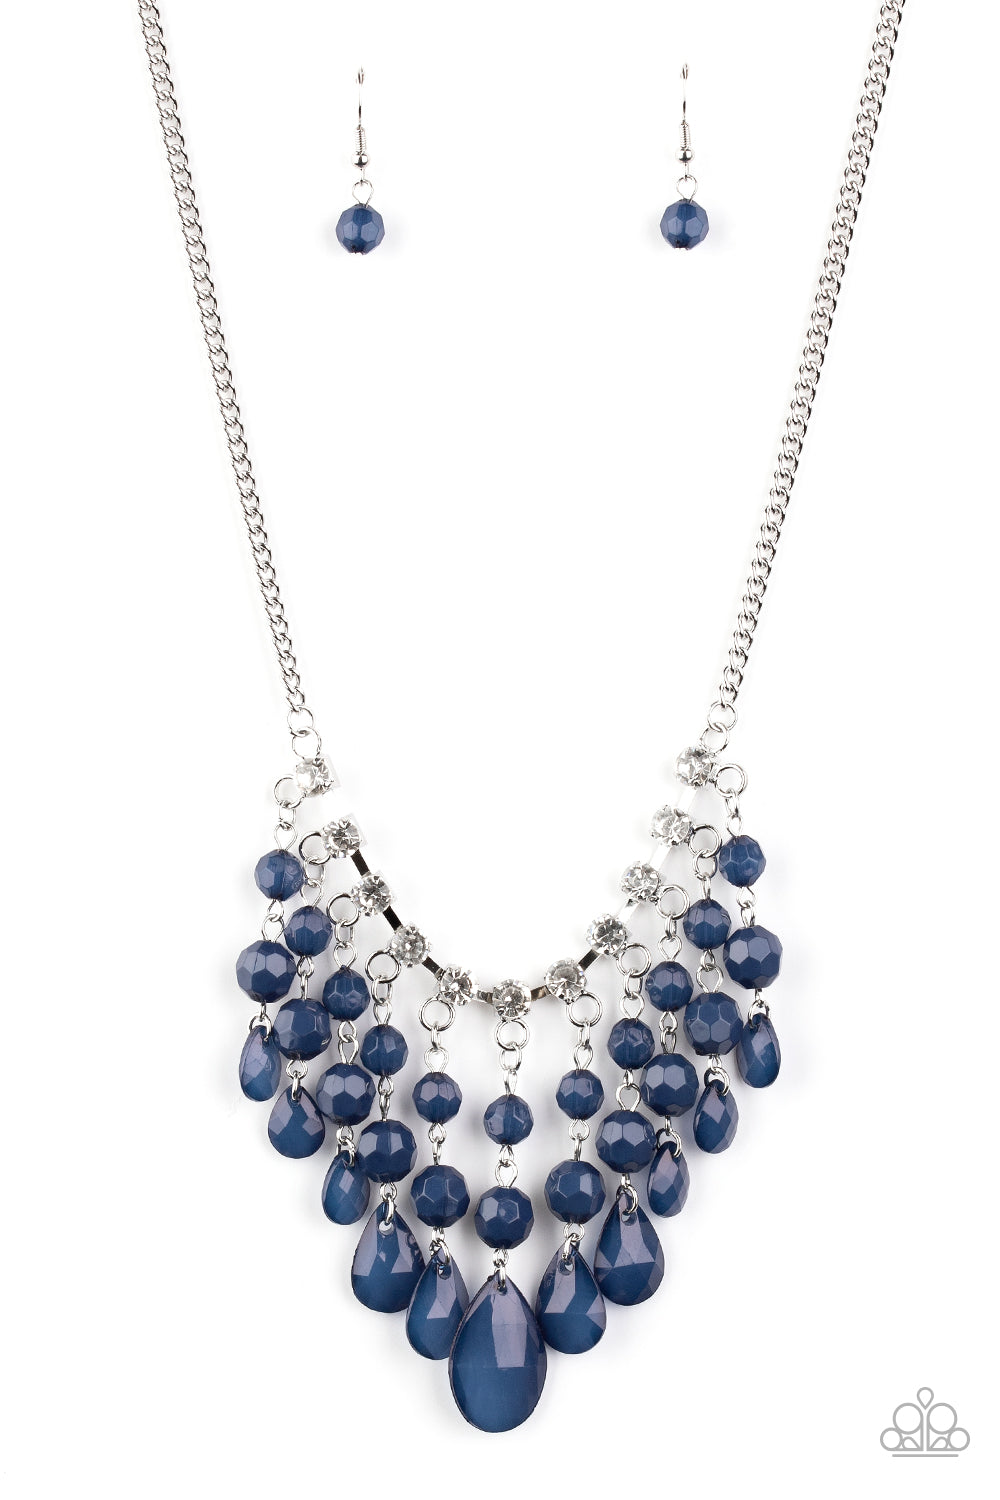 Social Network - Blue necklace